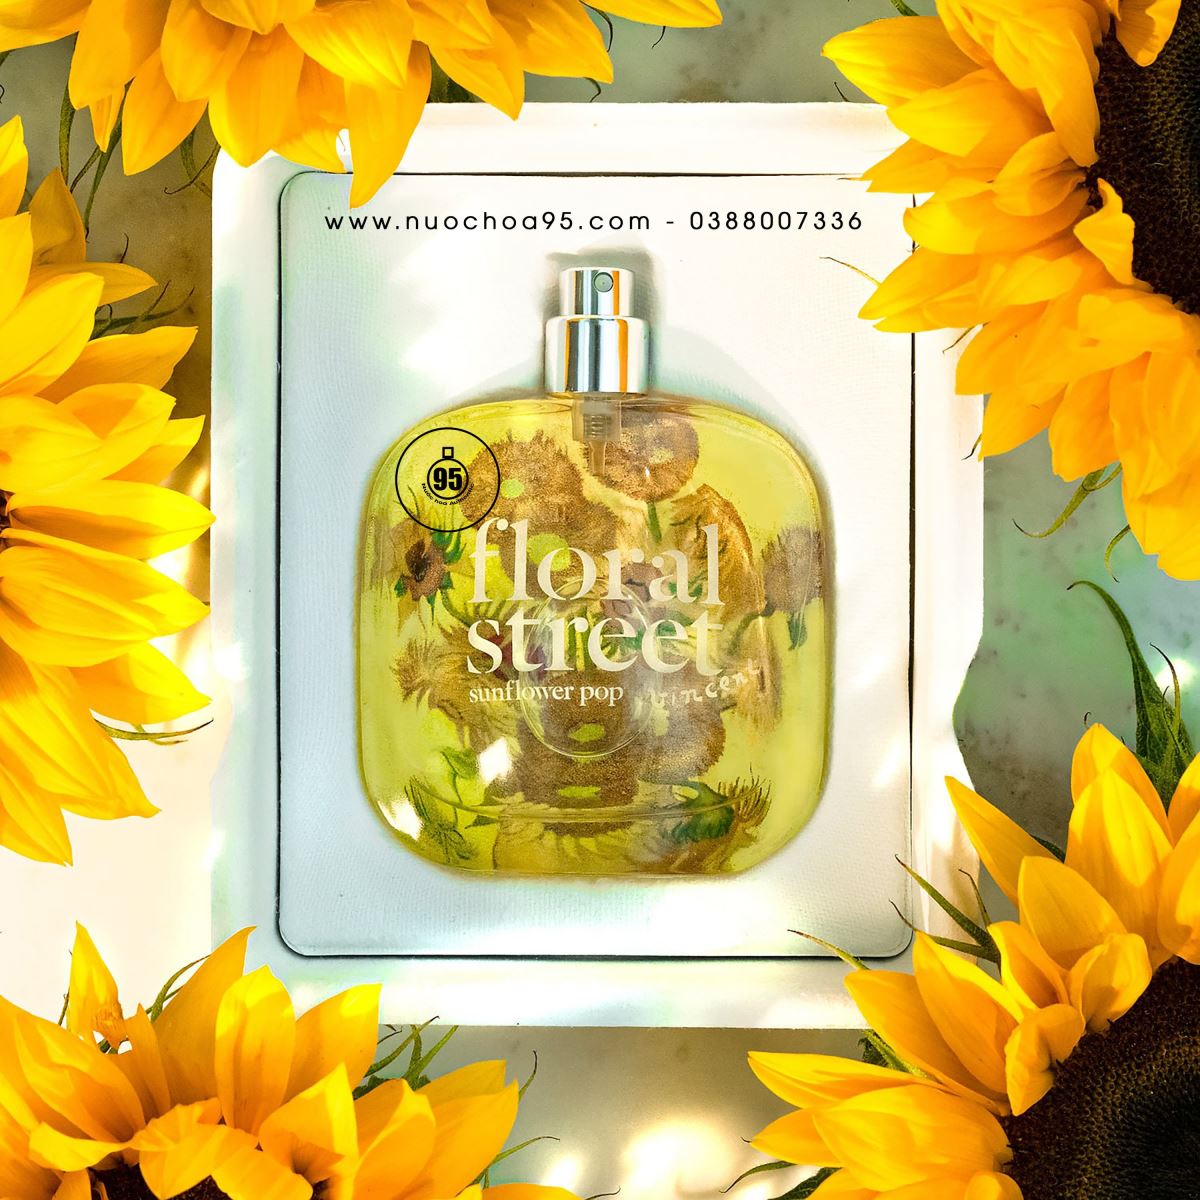 Nước hoa Floral Street Sunflower Pop - Ảnh 1